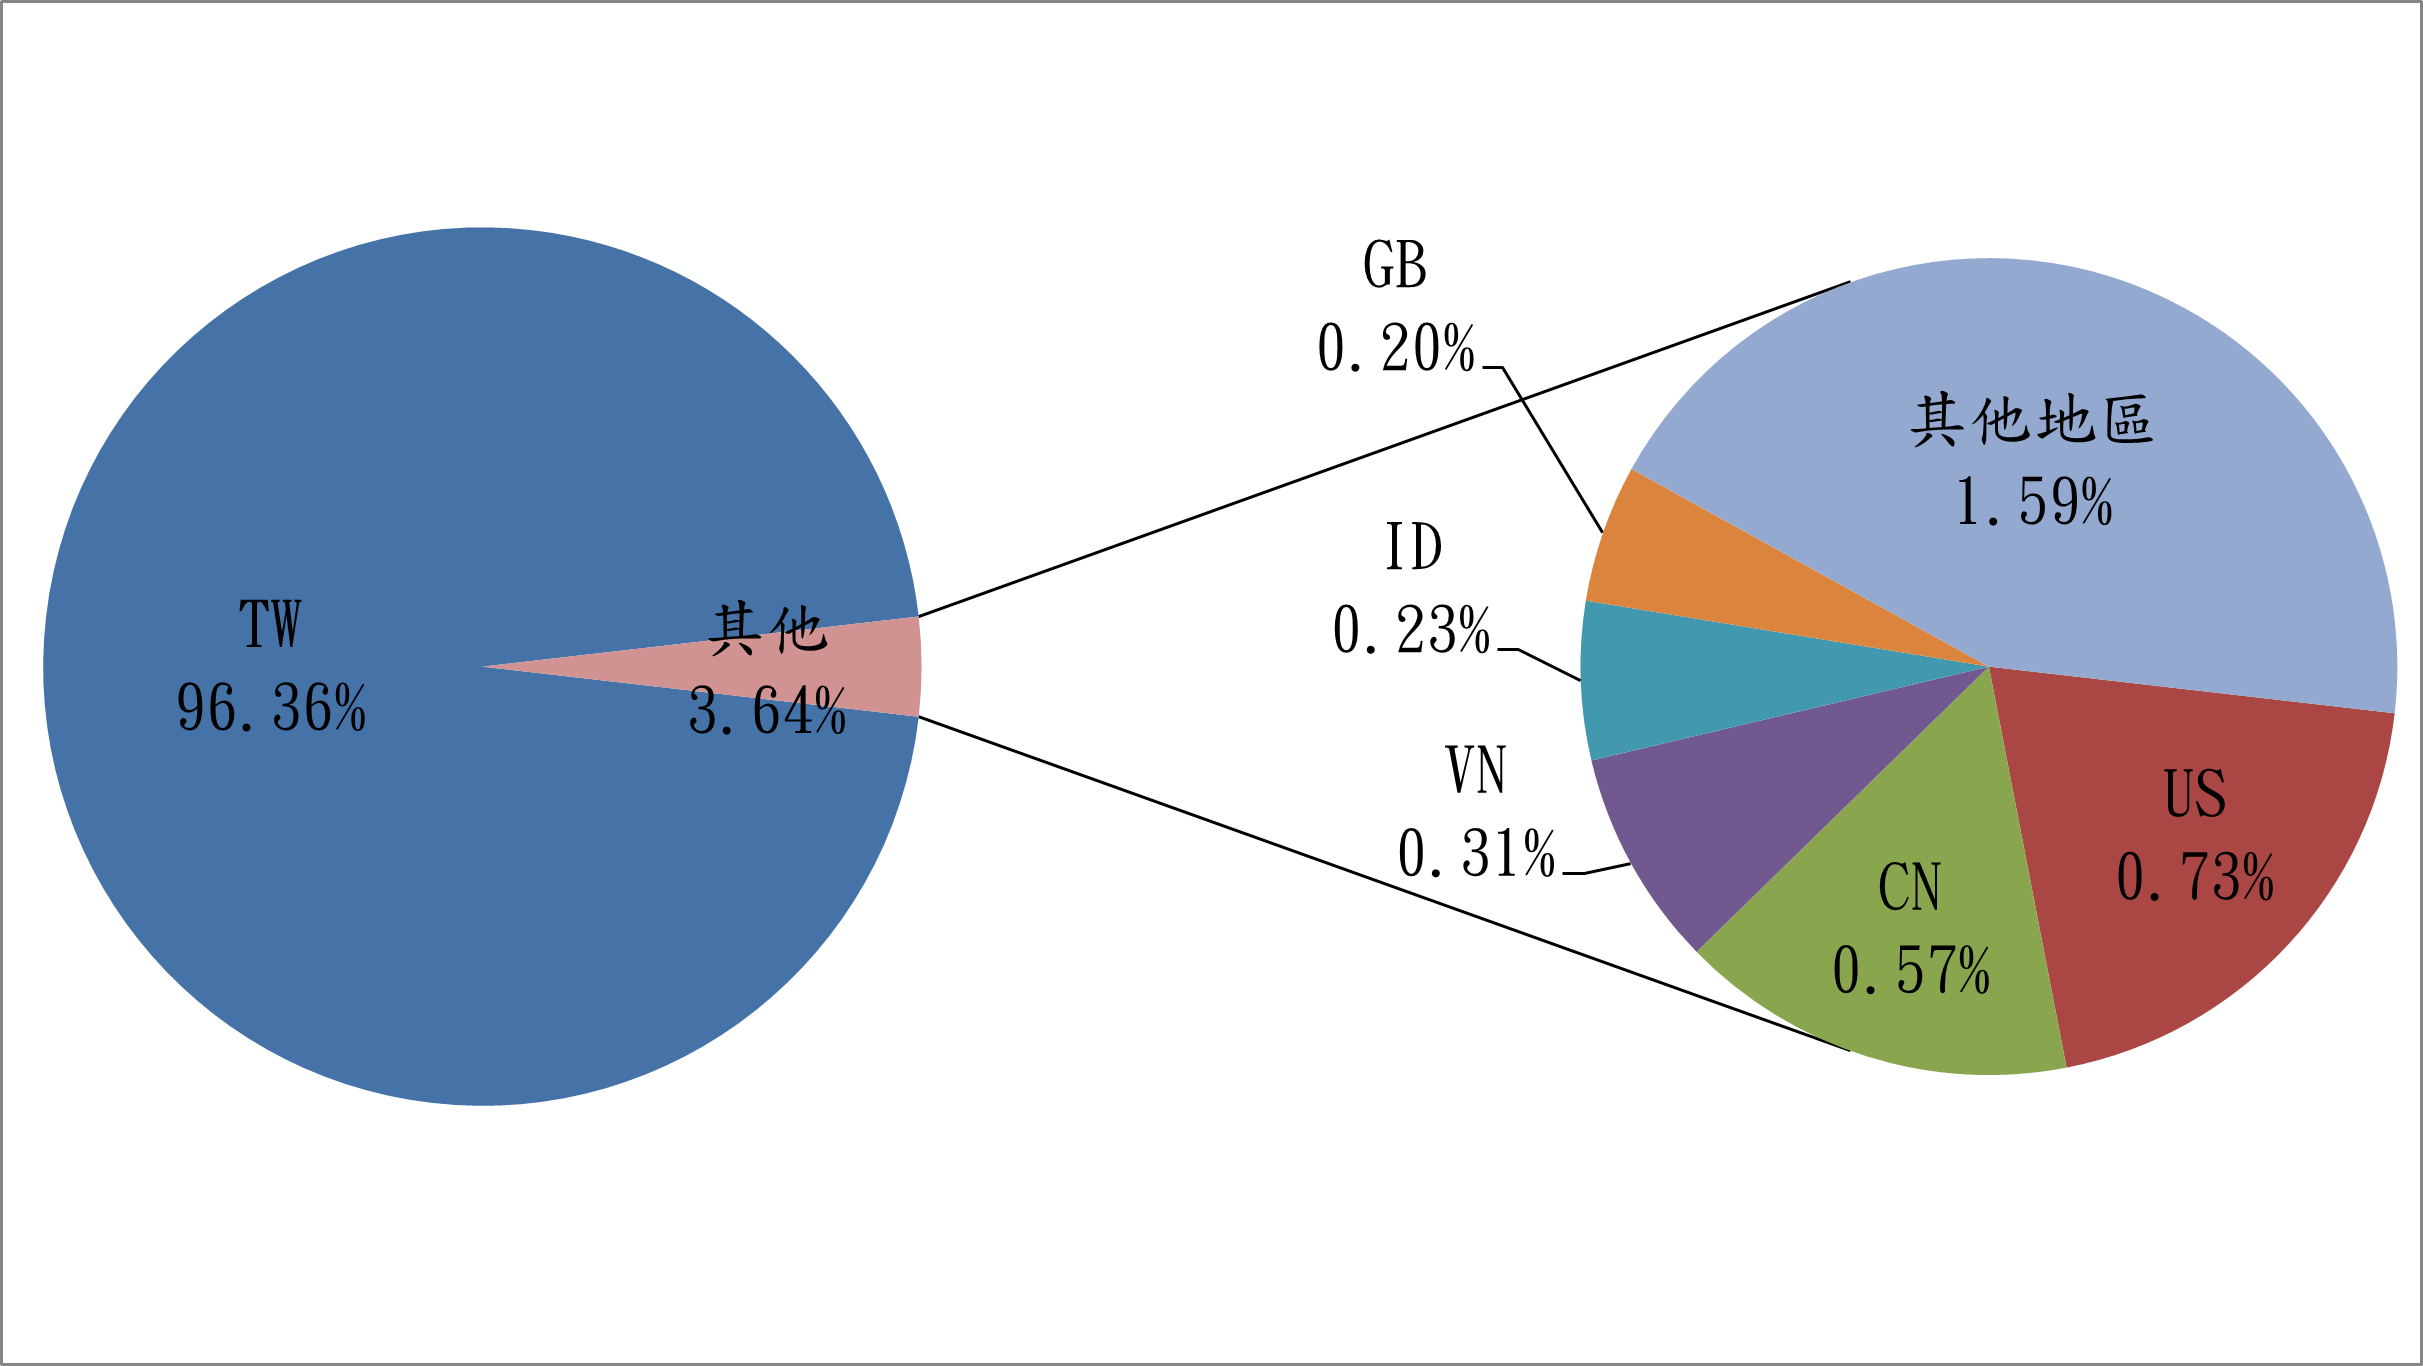 TW96.36% 其他3.64% GB0.20% ID0.23% VN0.31% CN0.57% US0.73% 其他地區1.59%